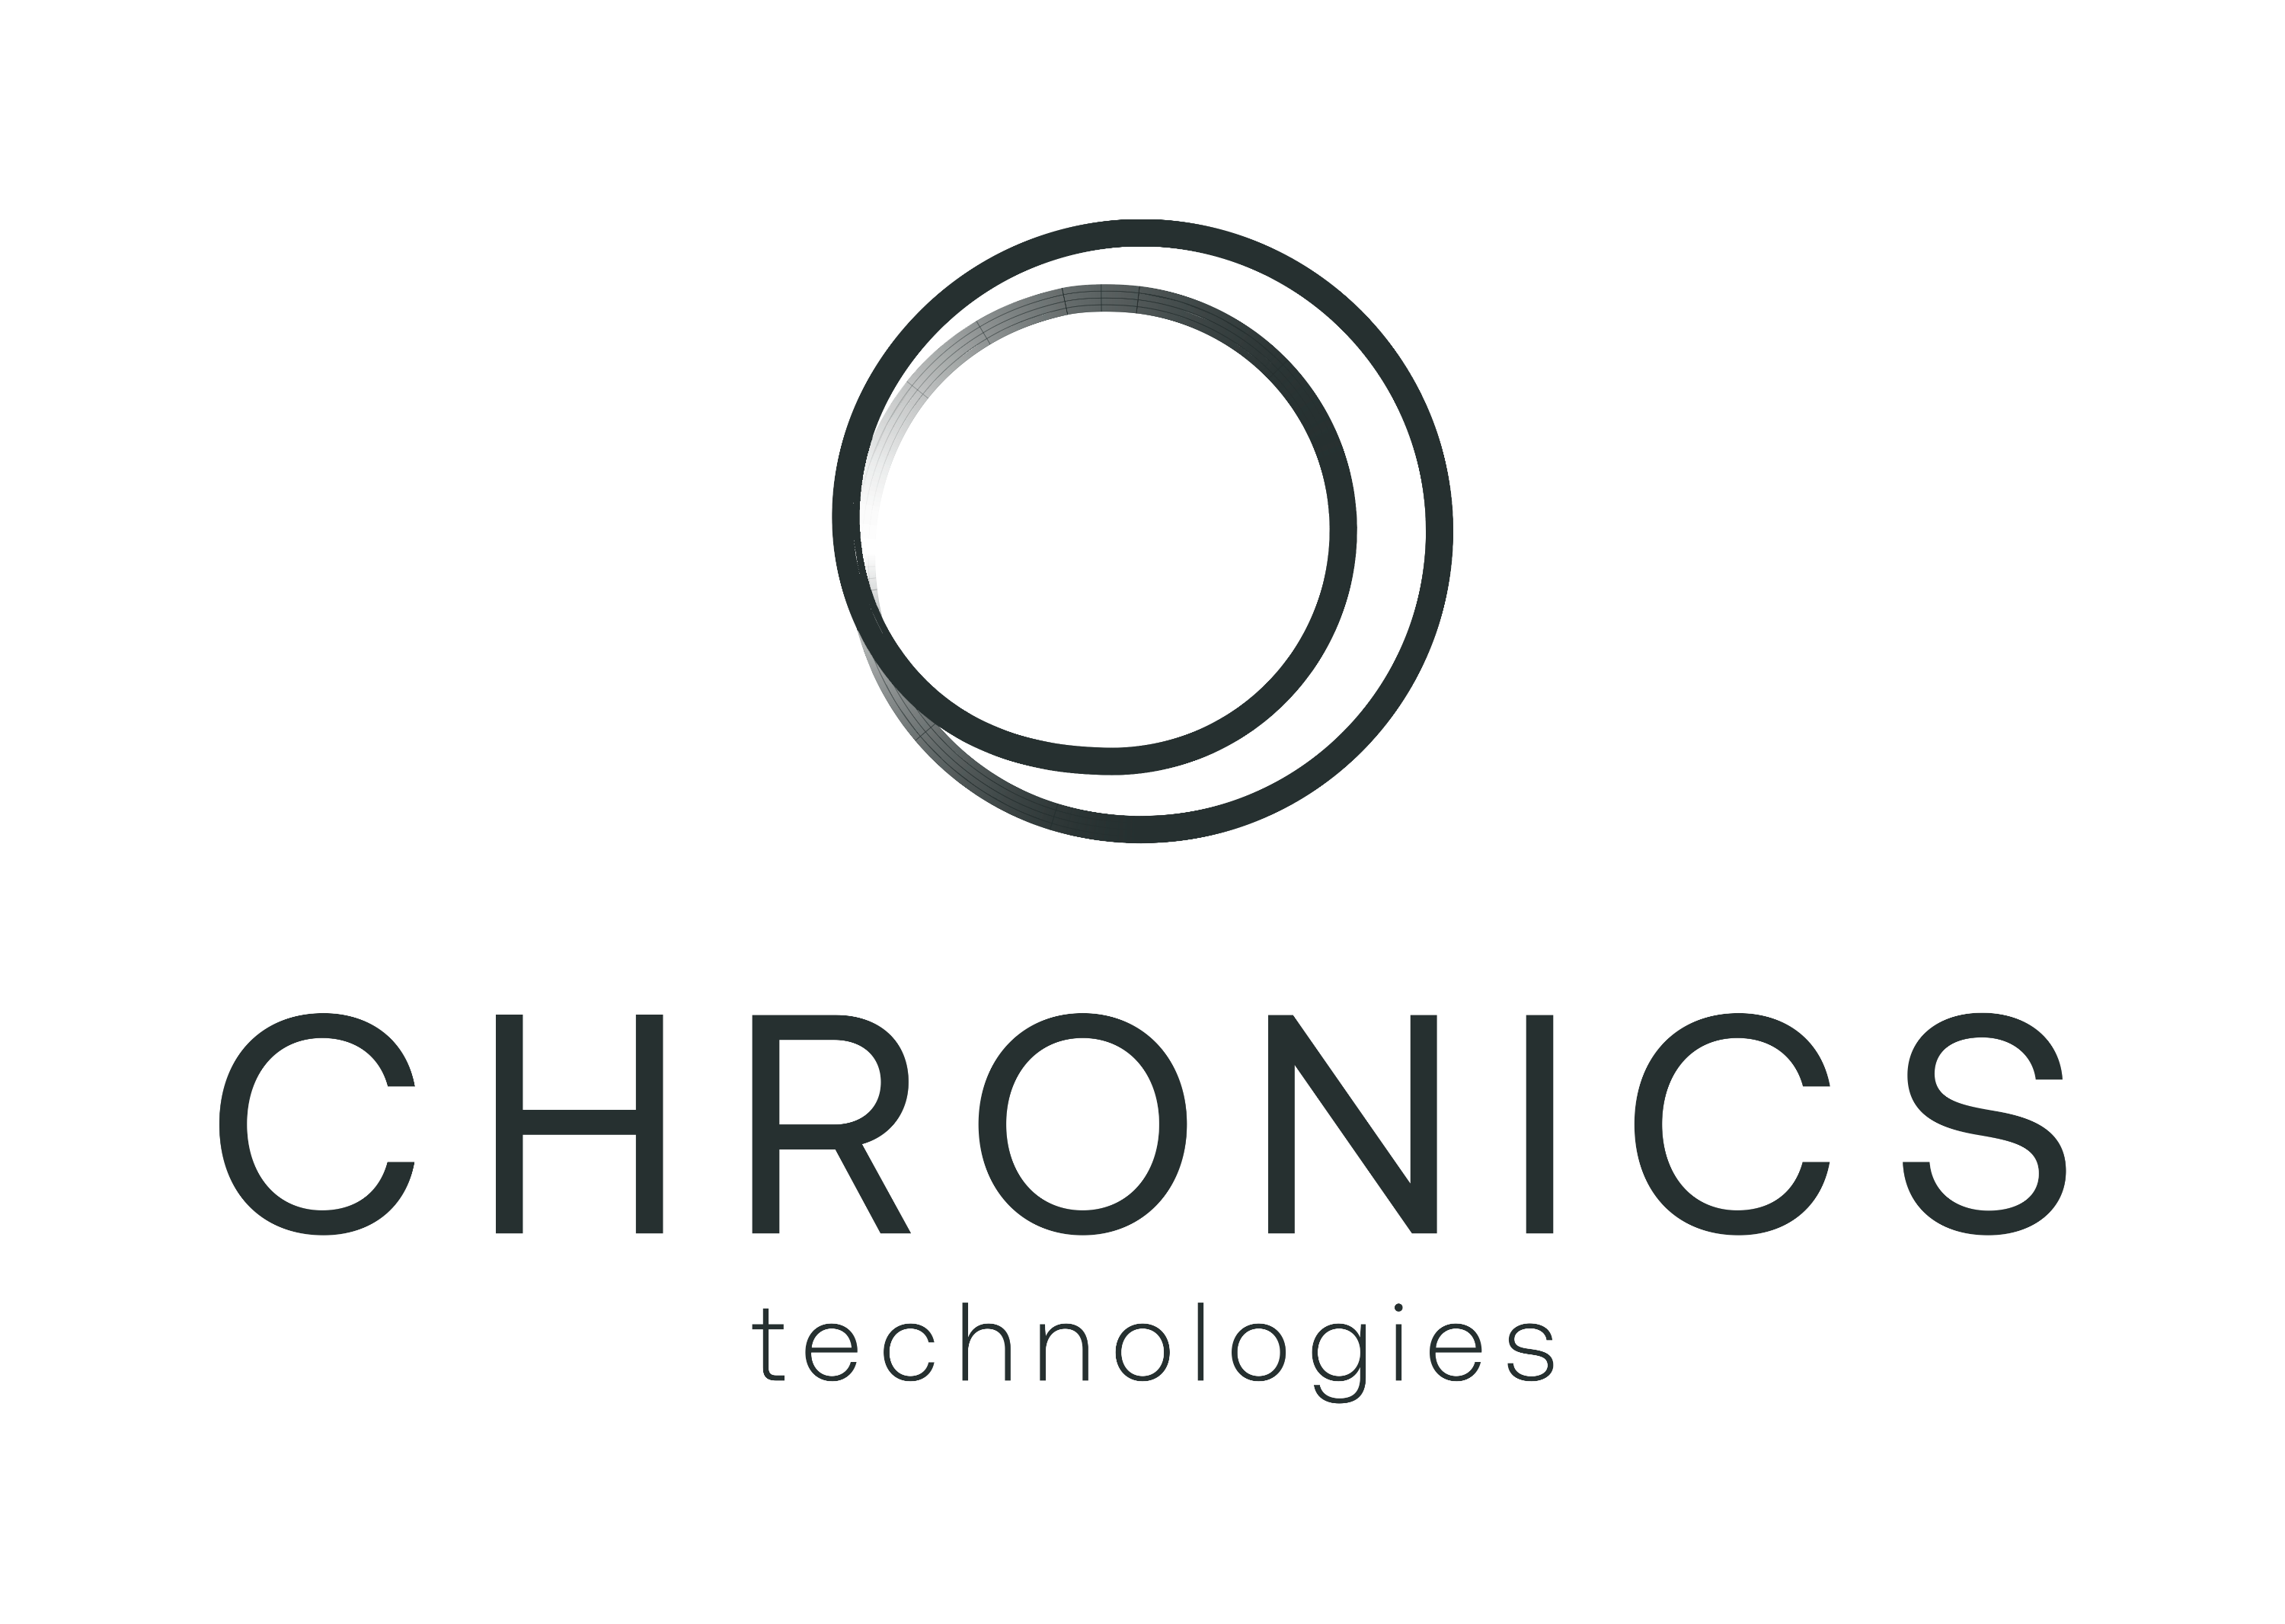 CHRONICS TECHNOLOGIES